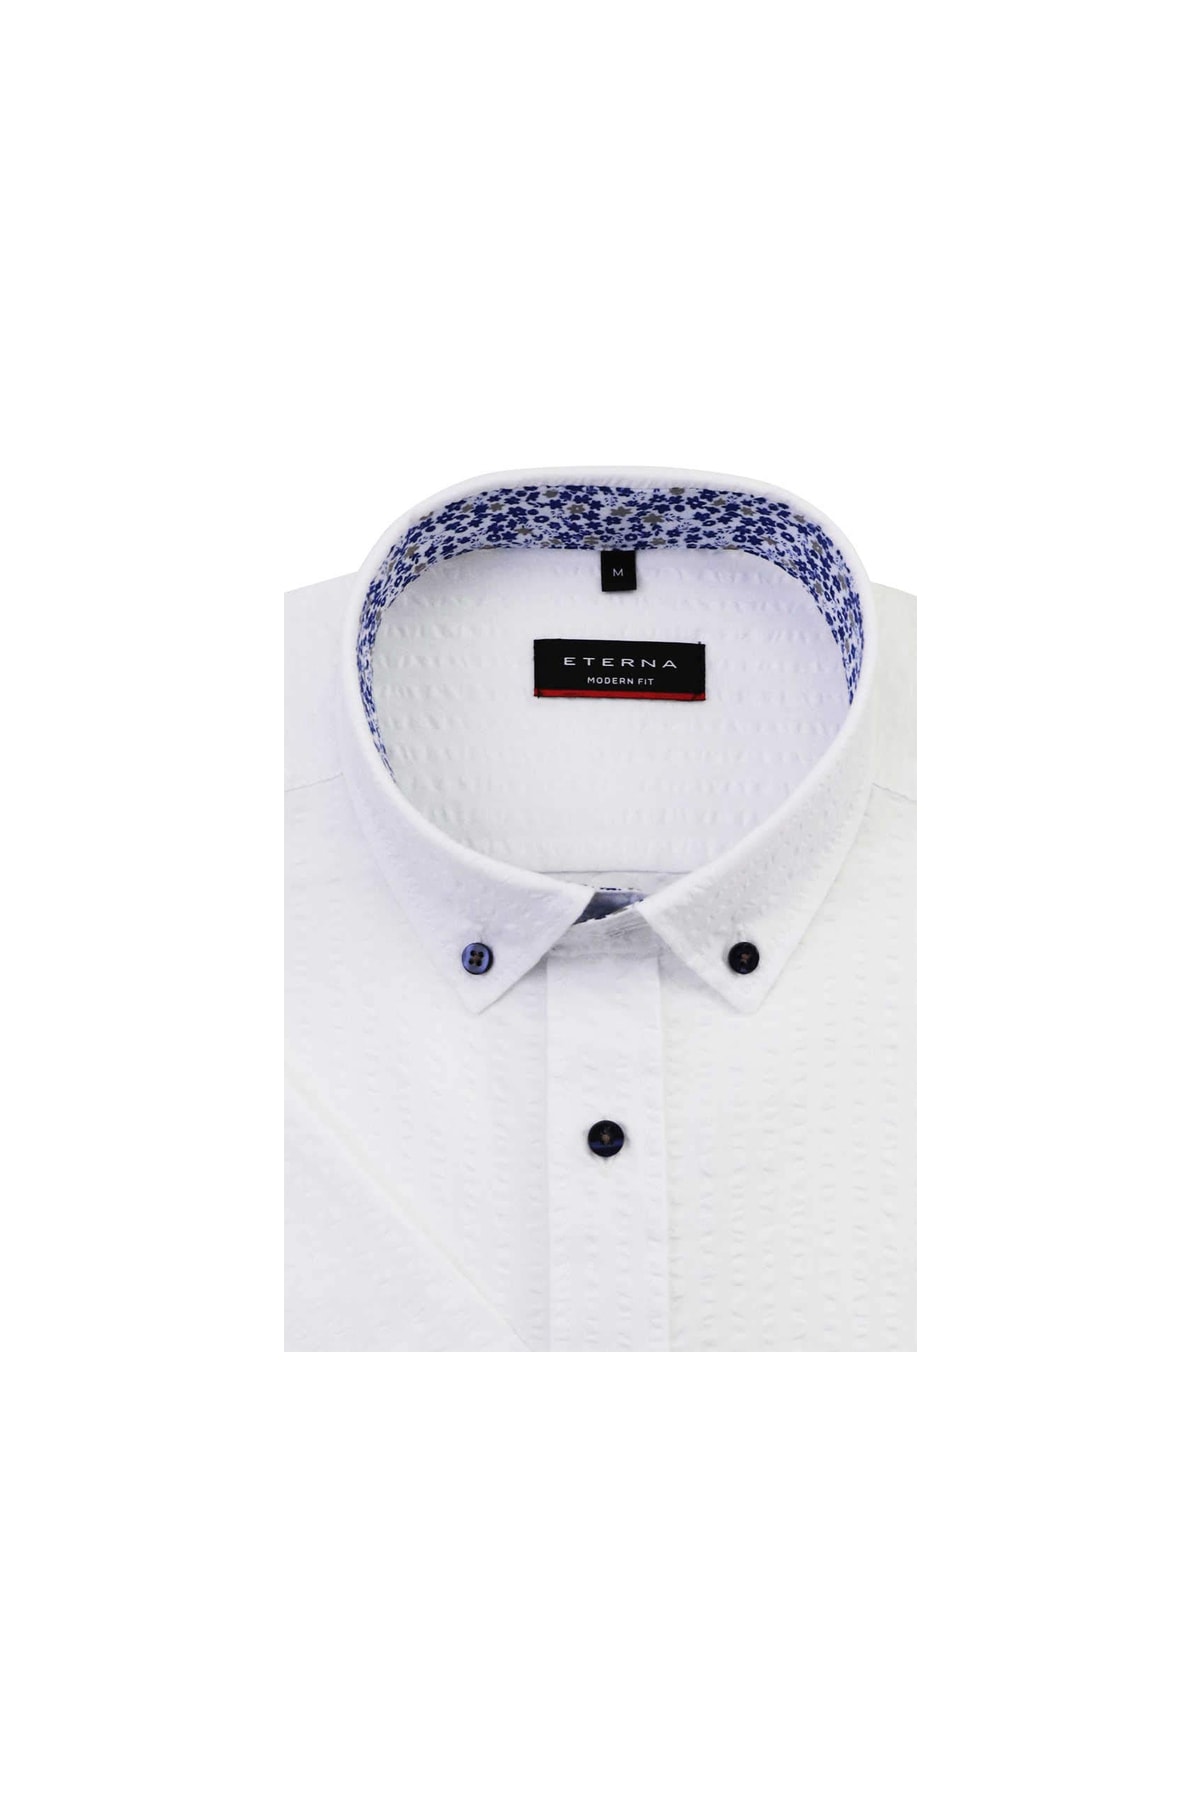 ETERNA Hemd Weiß Regular Fit Fast ausverkauft AR7533